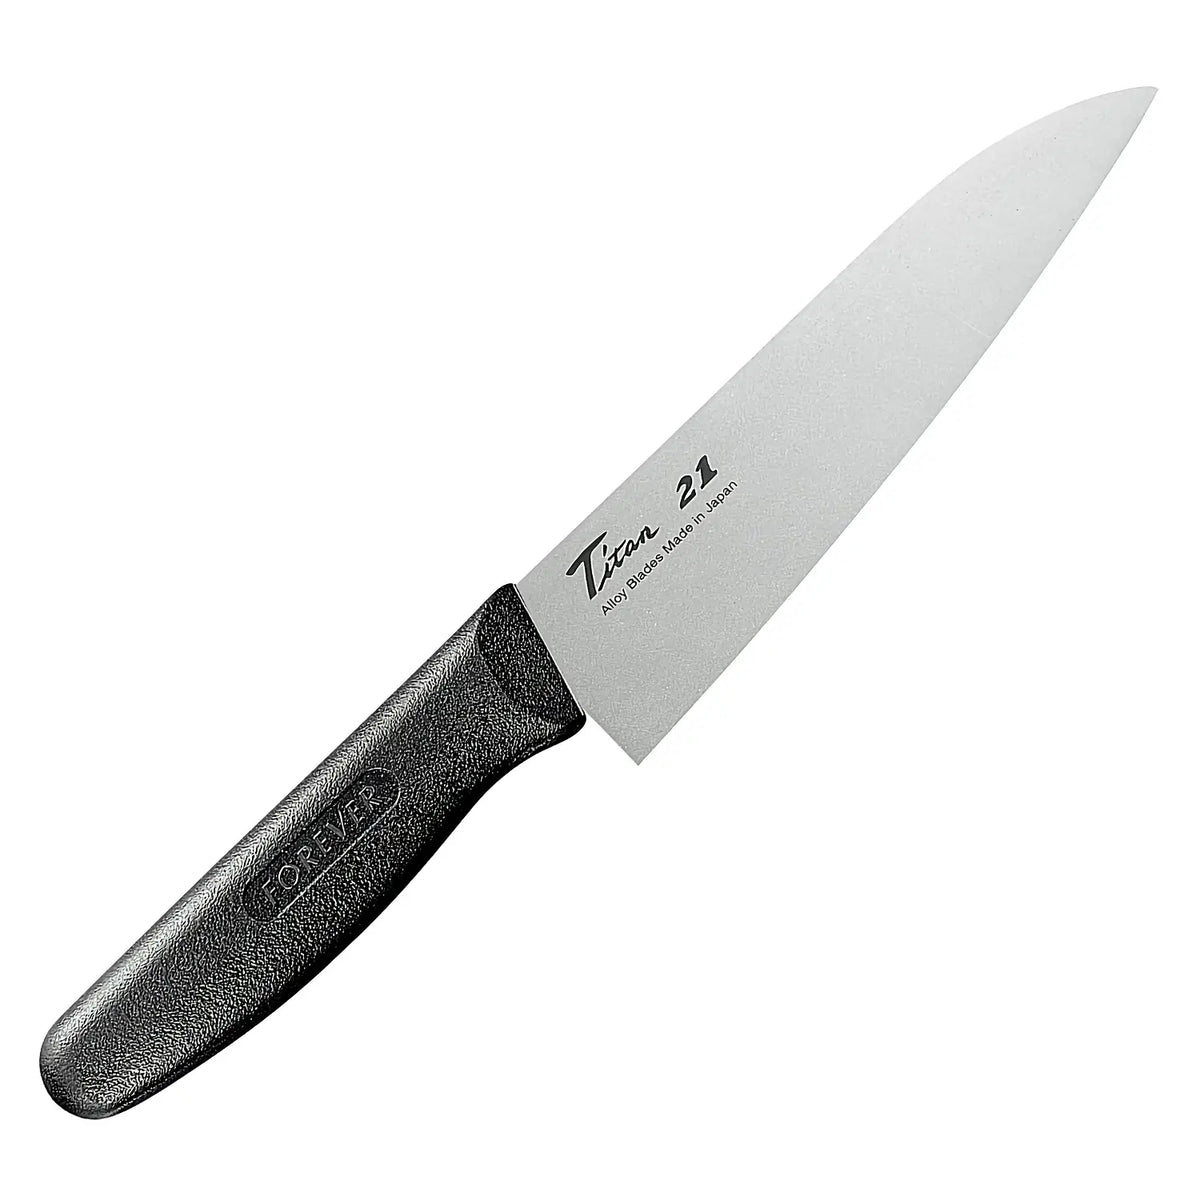 FOREVER Titanium Hybrid Santoku Knife